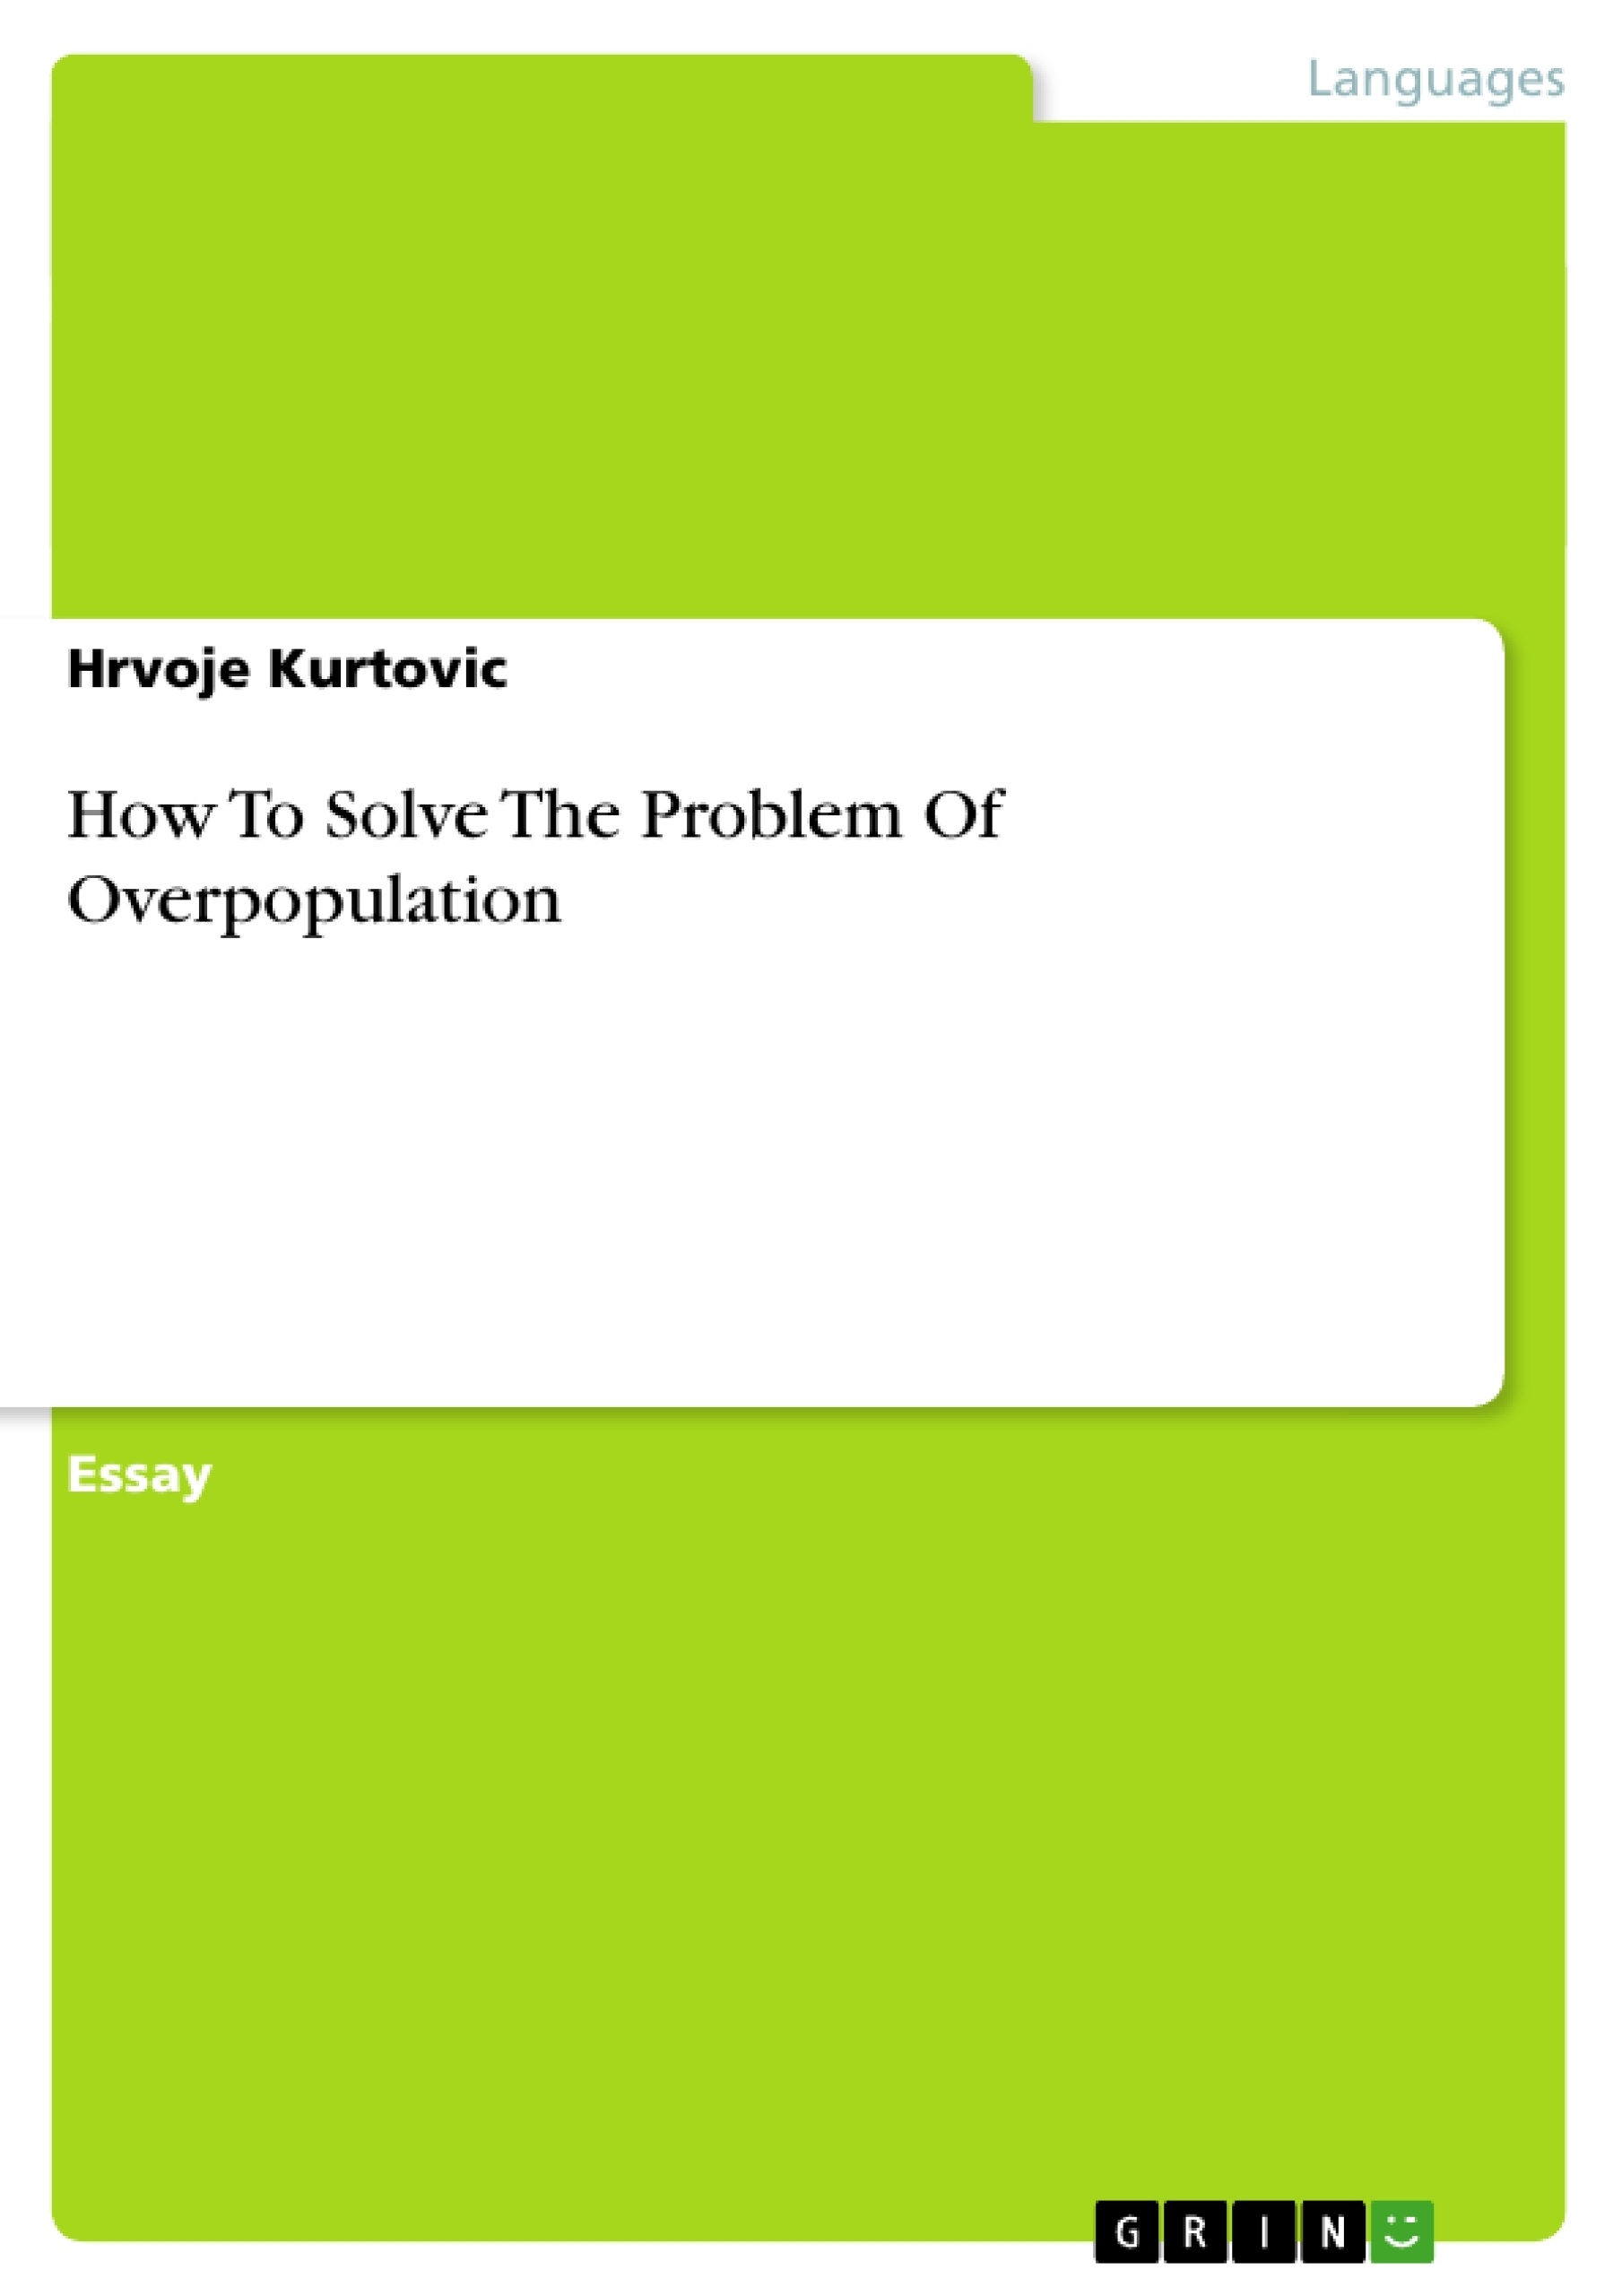 Essay on overpopulation